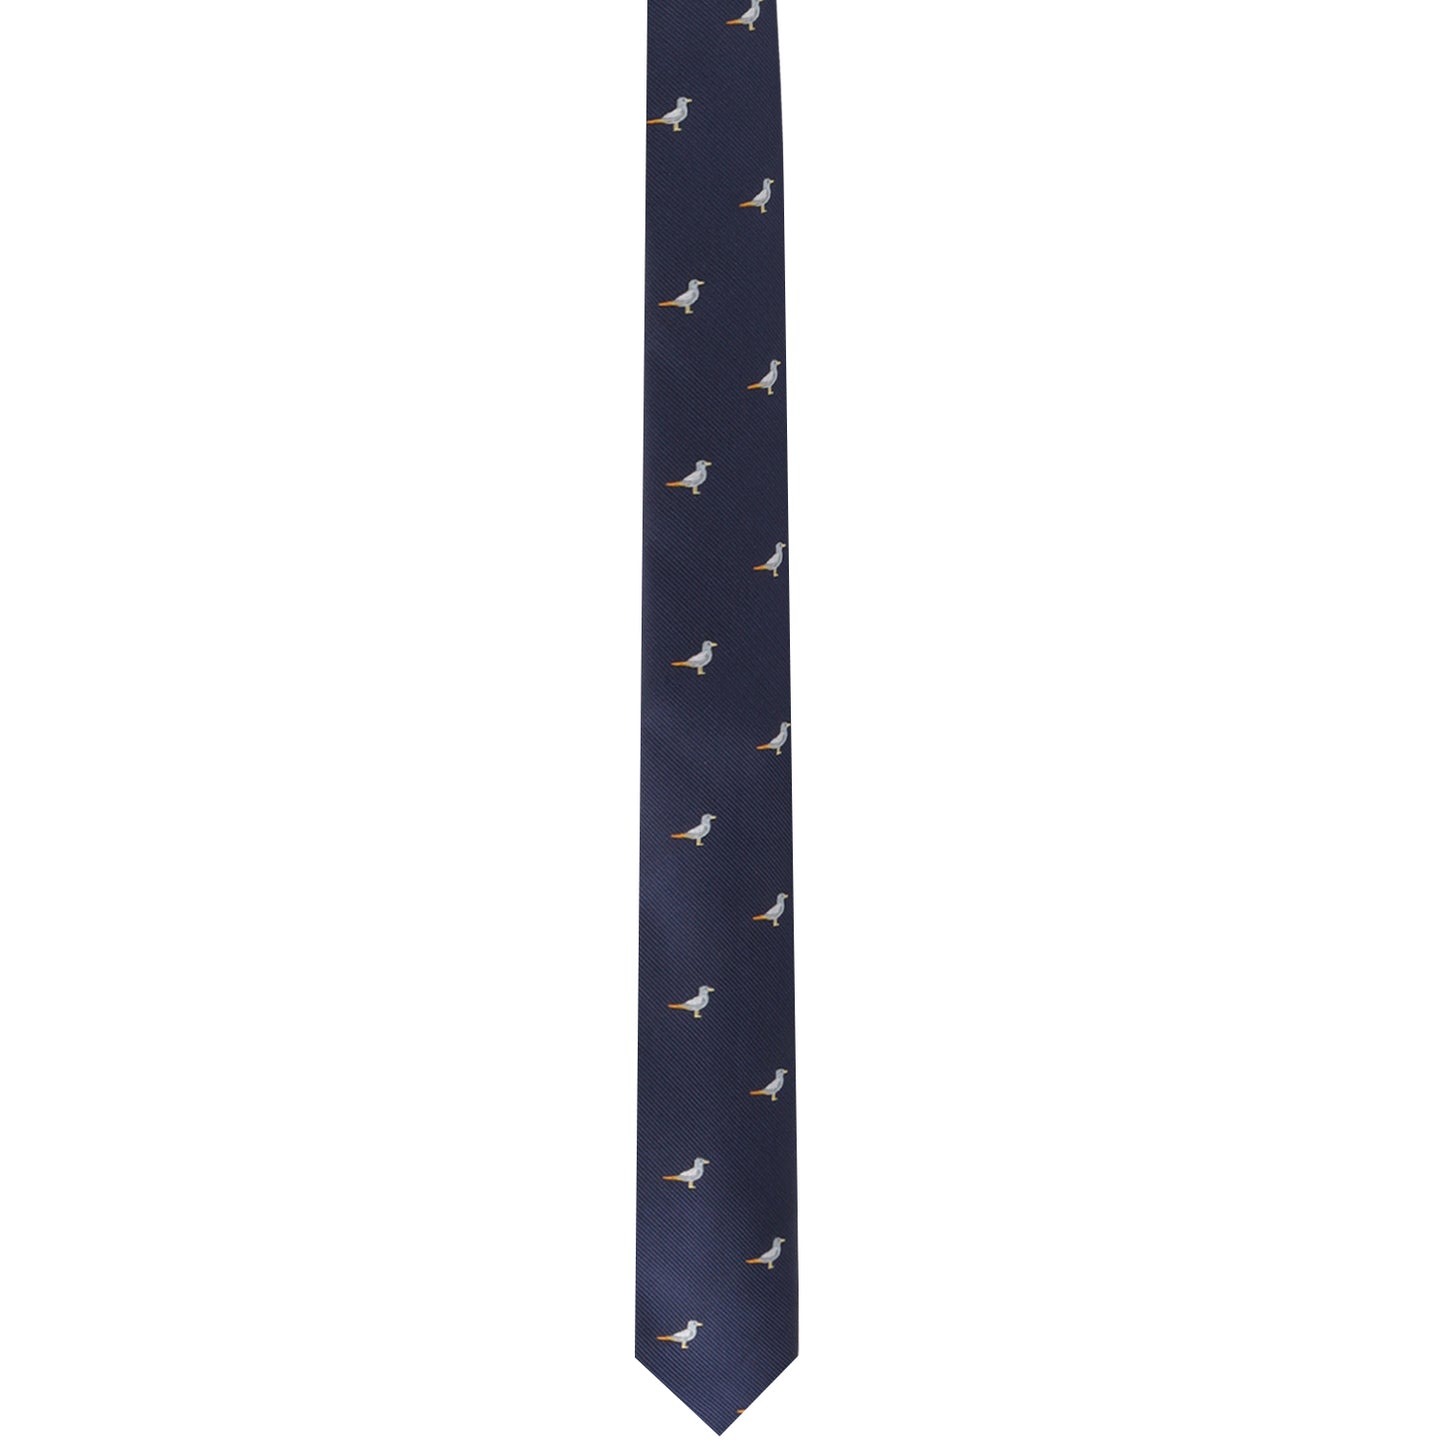 Seagul Skinny Tie